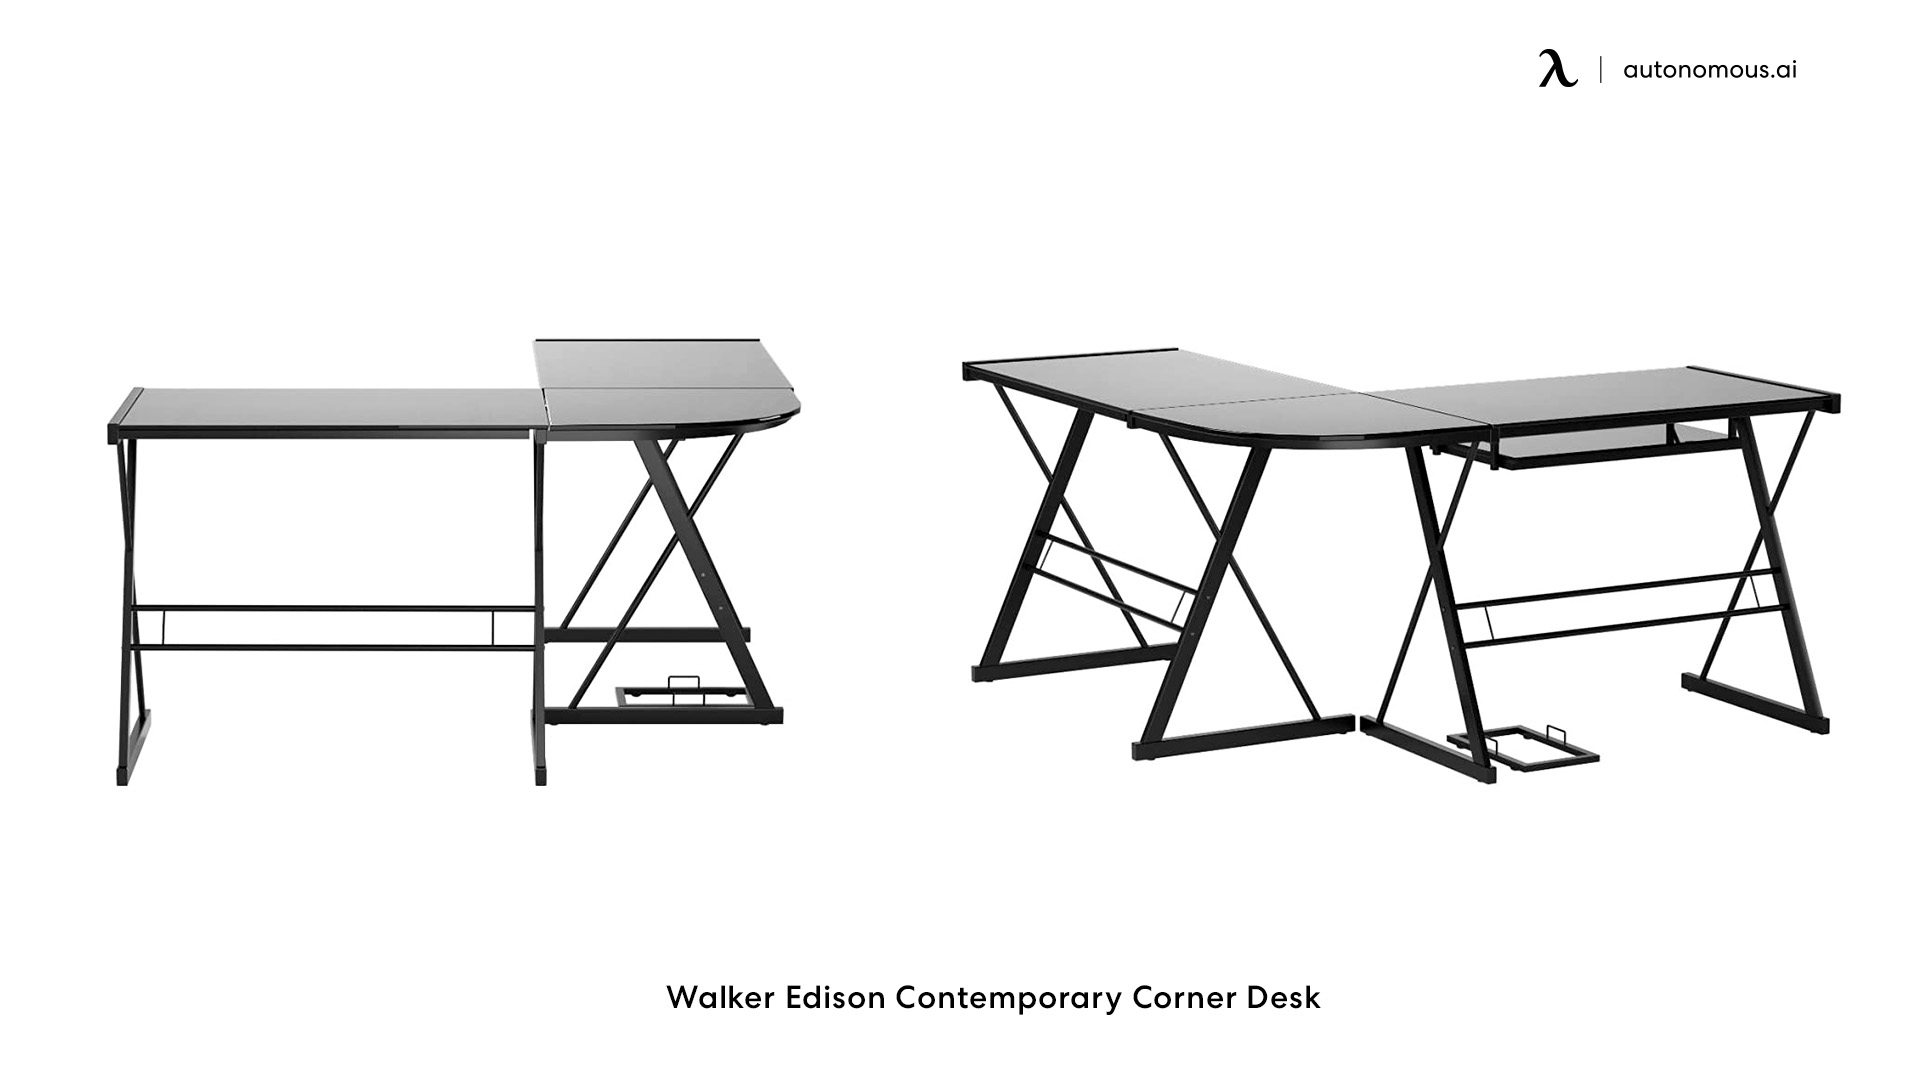 Walker Edison Contemporary Corner Desk